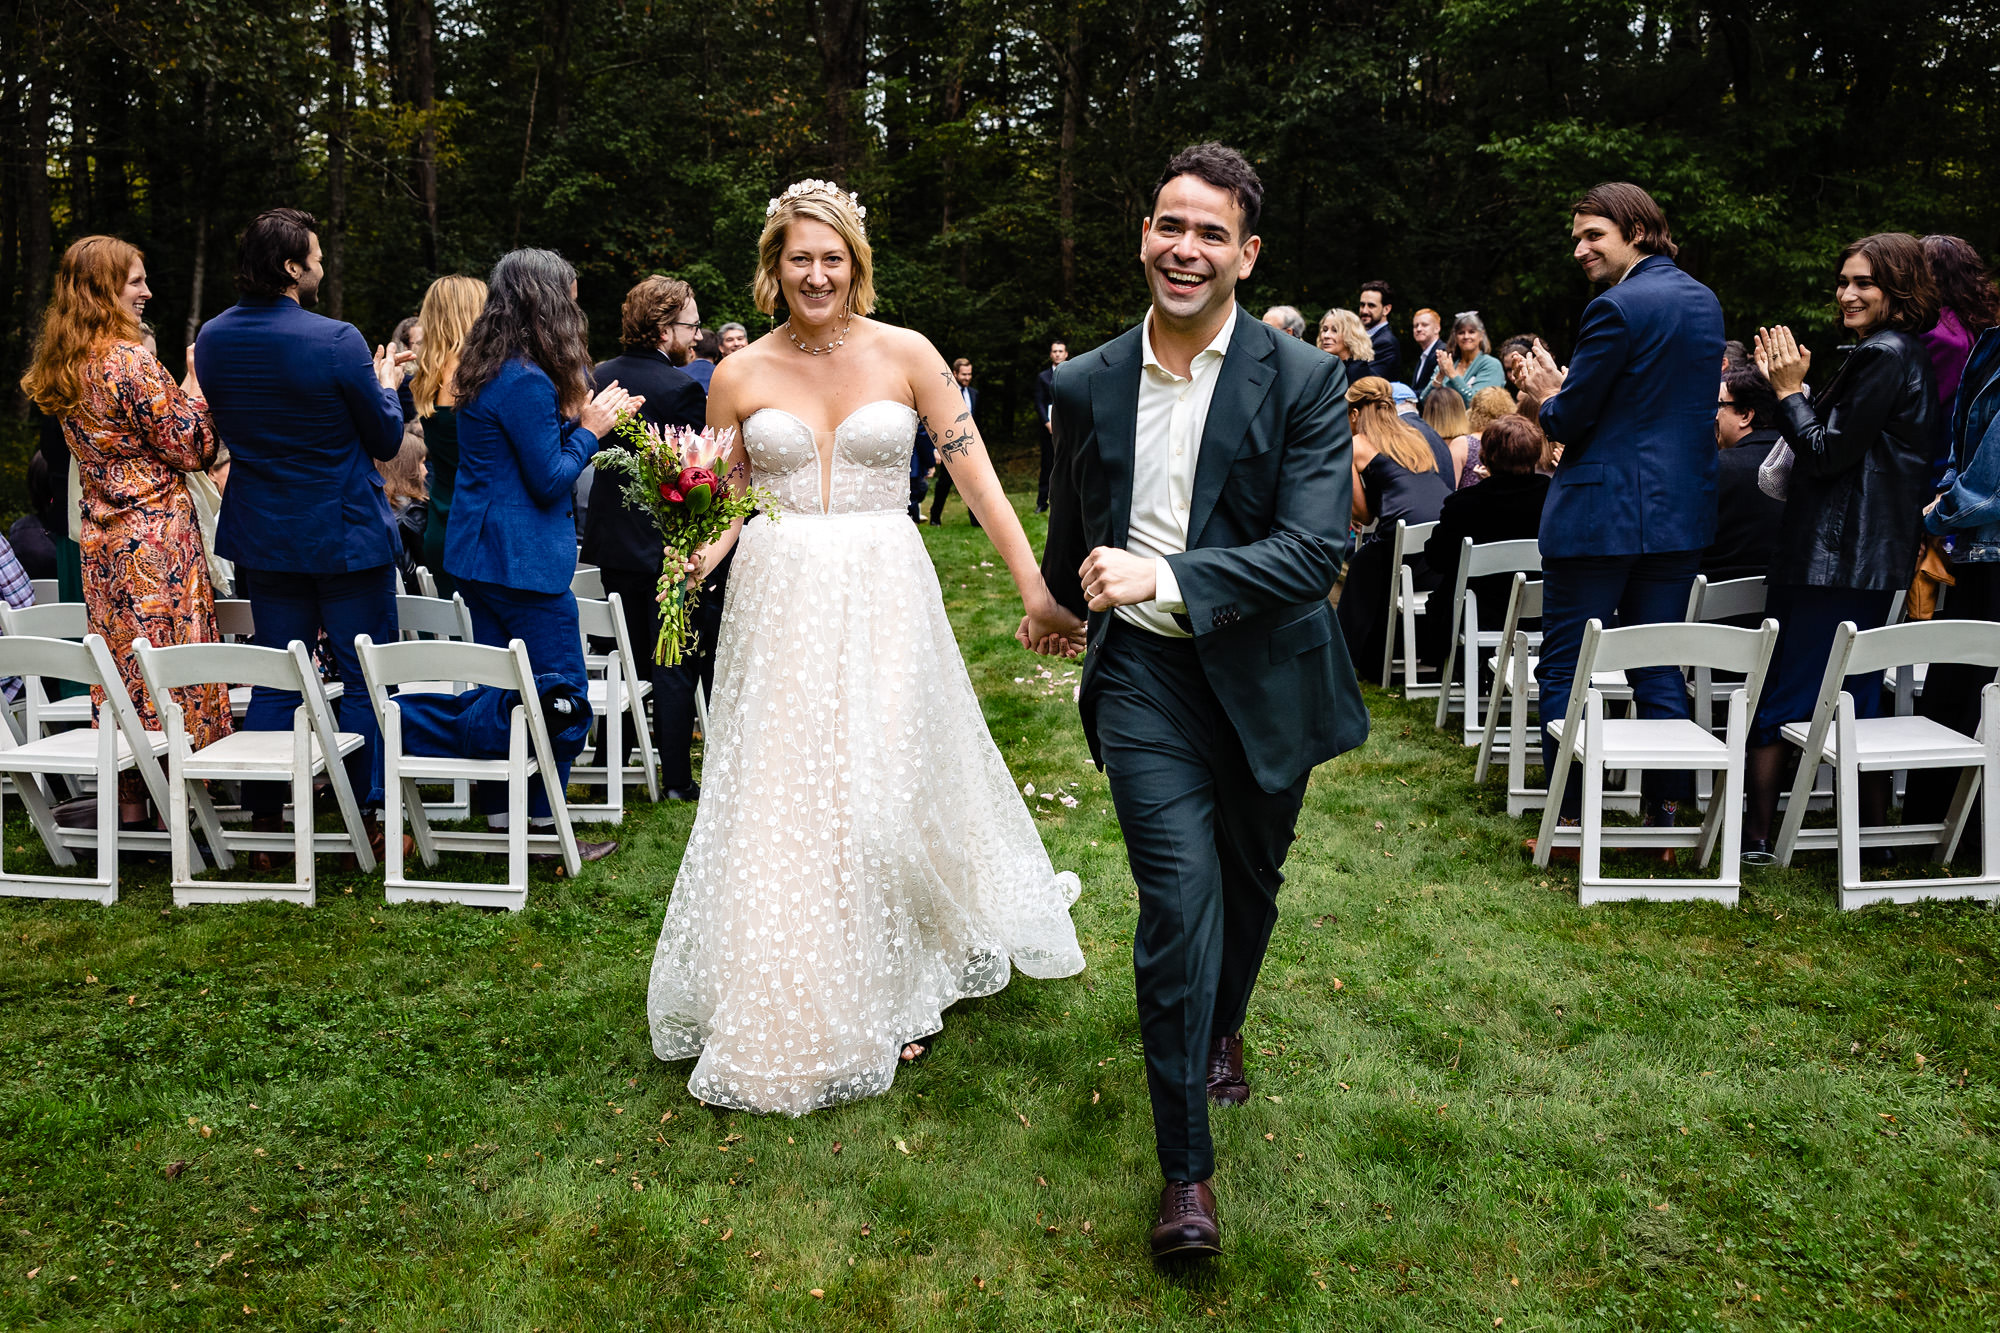 Colleen & Jared’s Arrowheads Estate Wedding in Cape Neddick